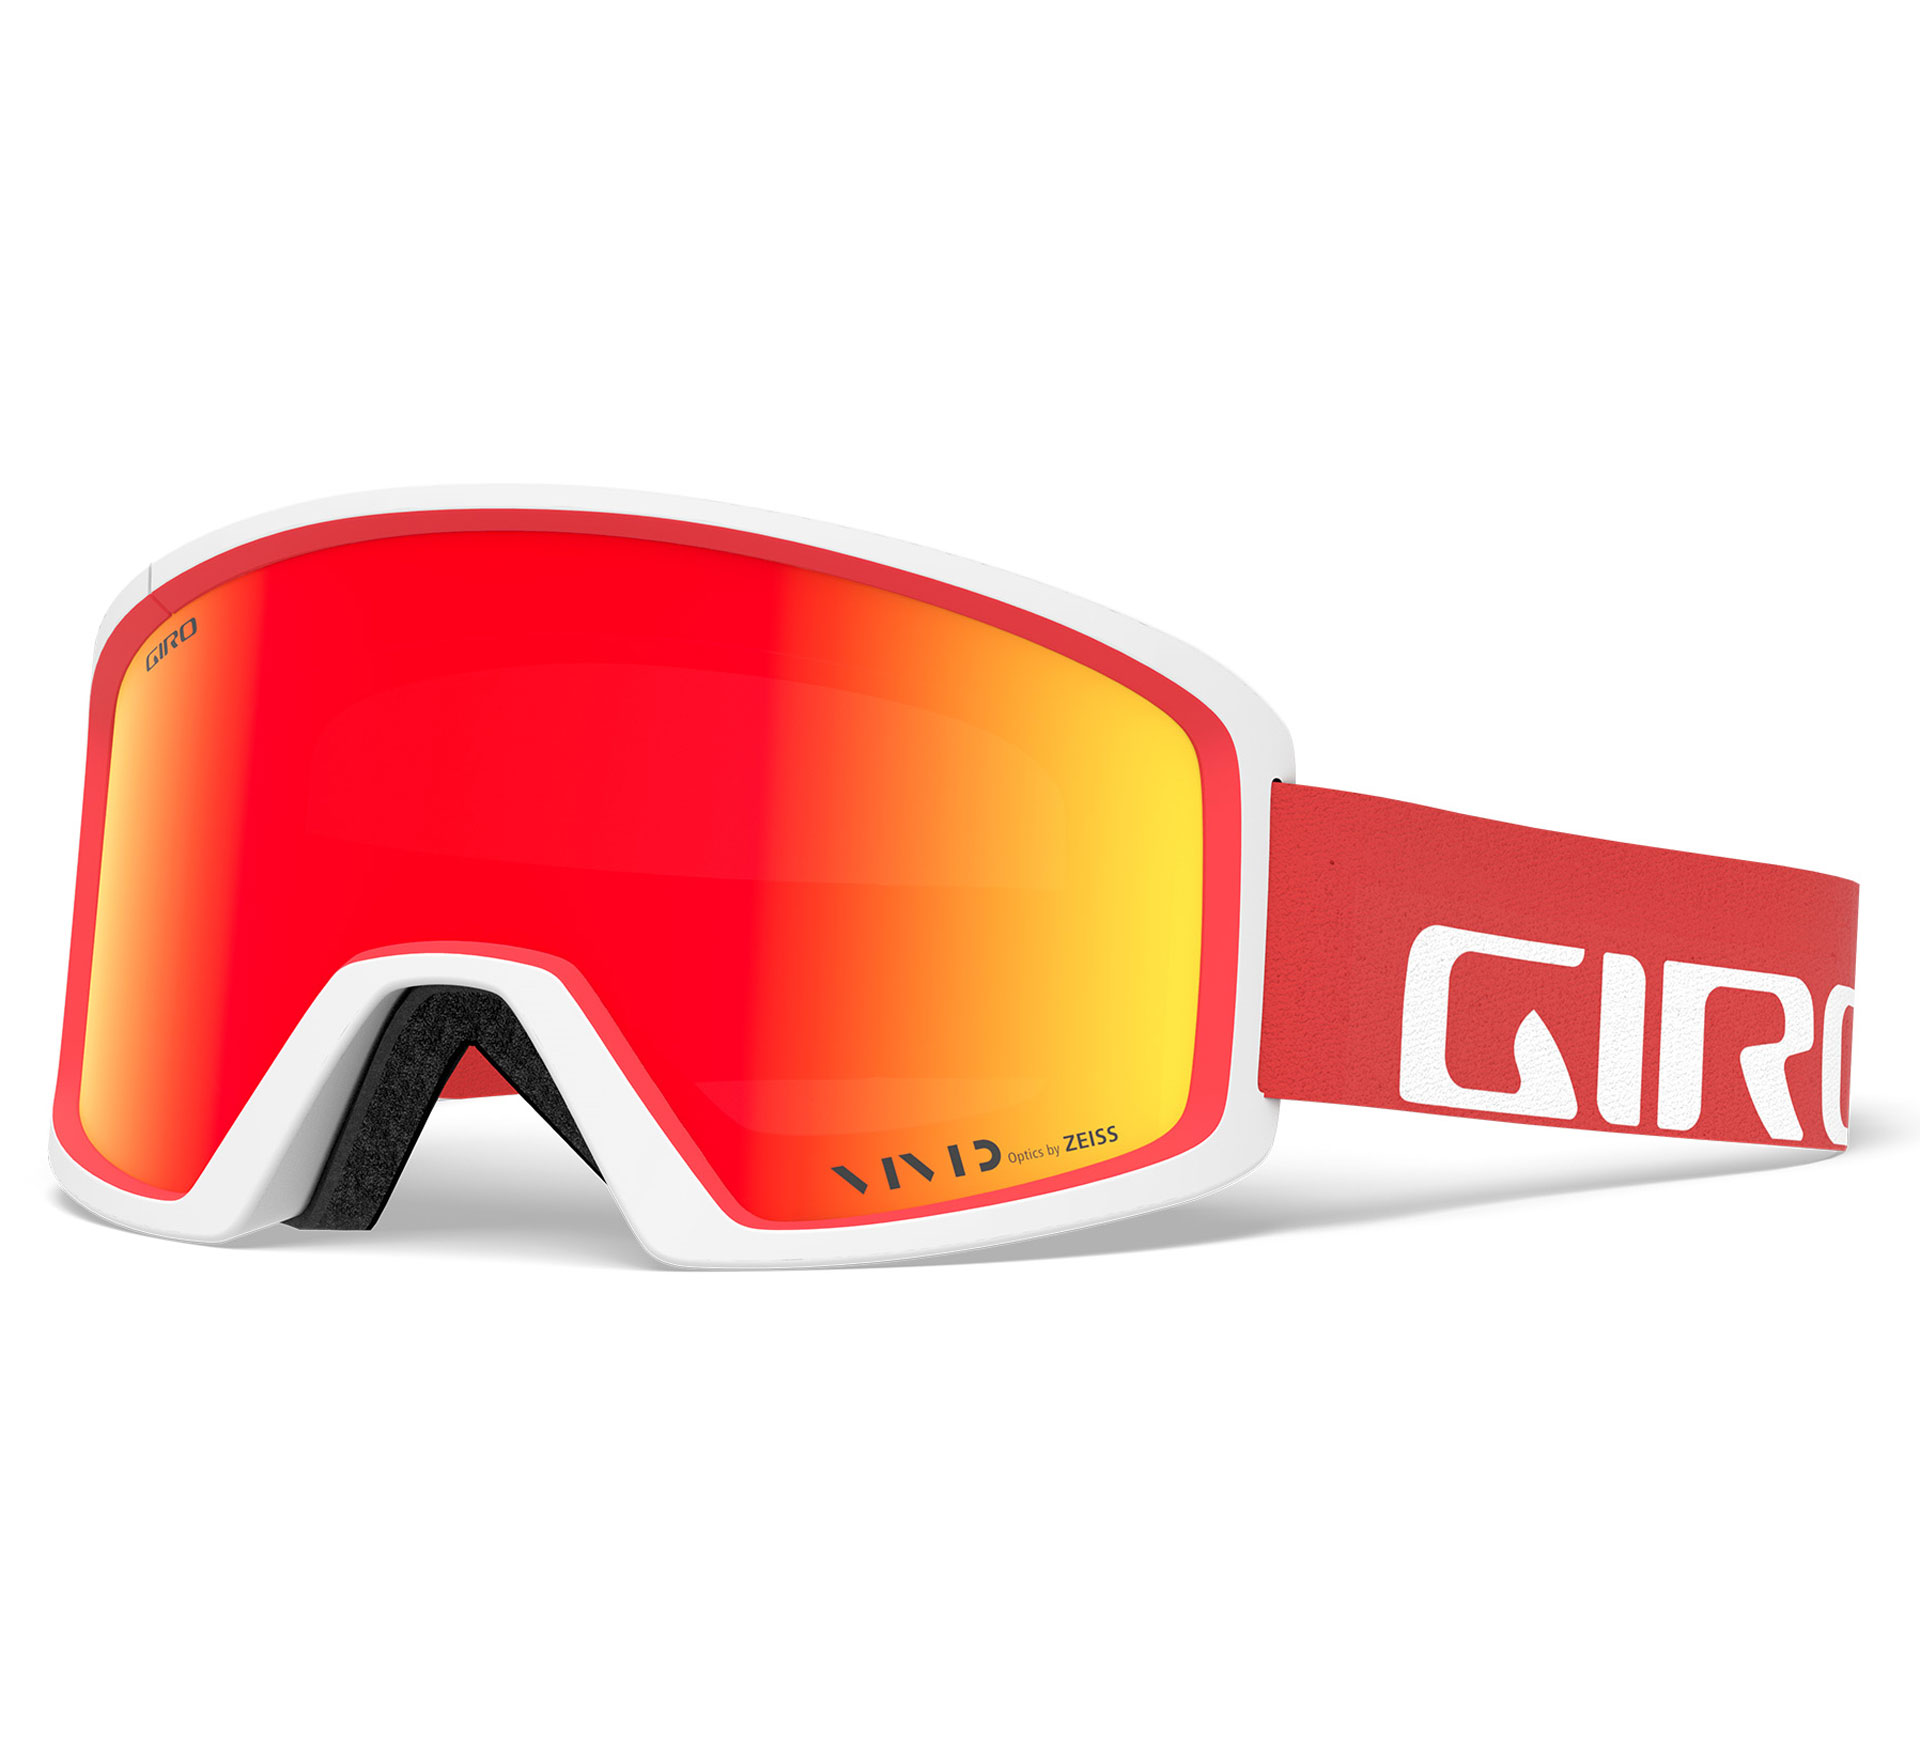 Masque de ski Giro Blok